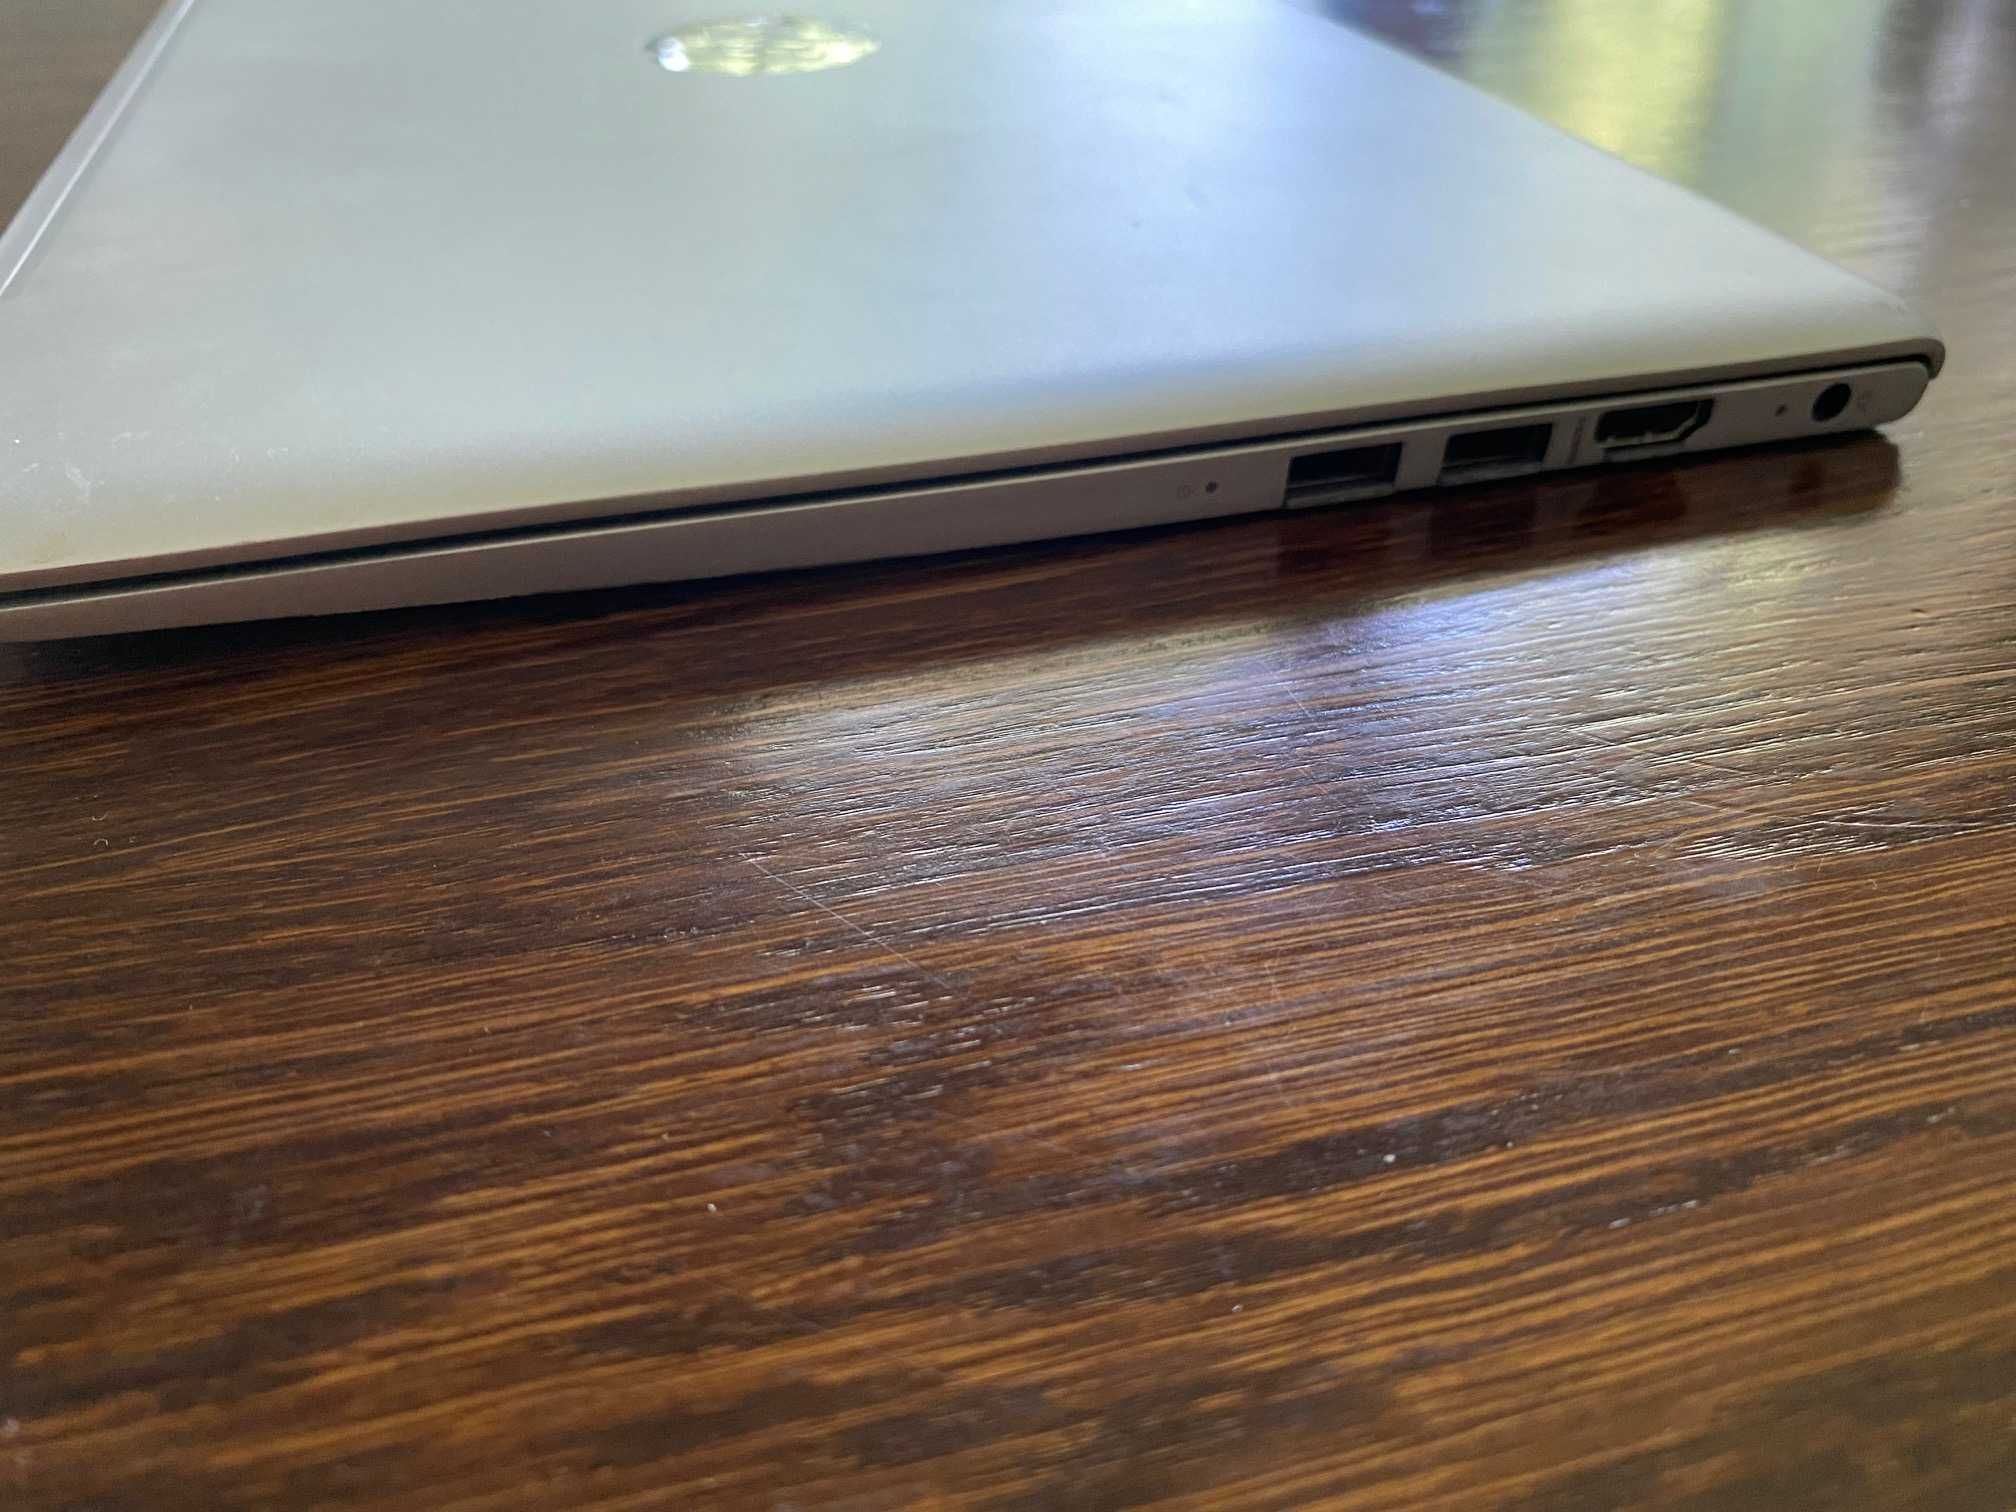 Lekki i cienki Laptop HP Envy 13 cali model 13-d010nw airbook